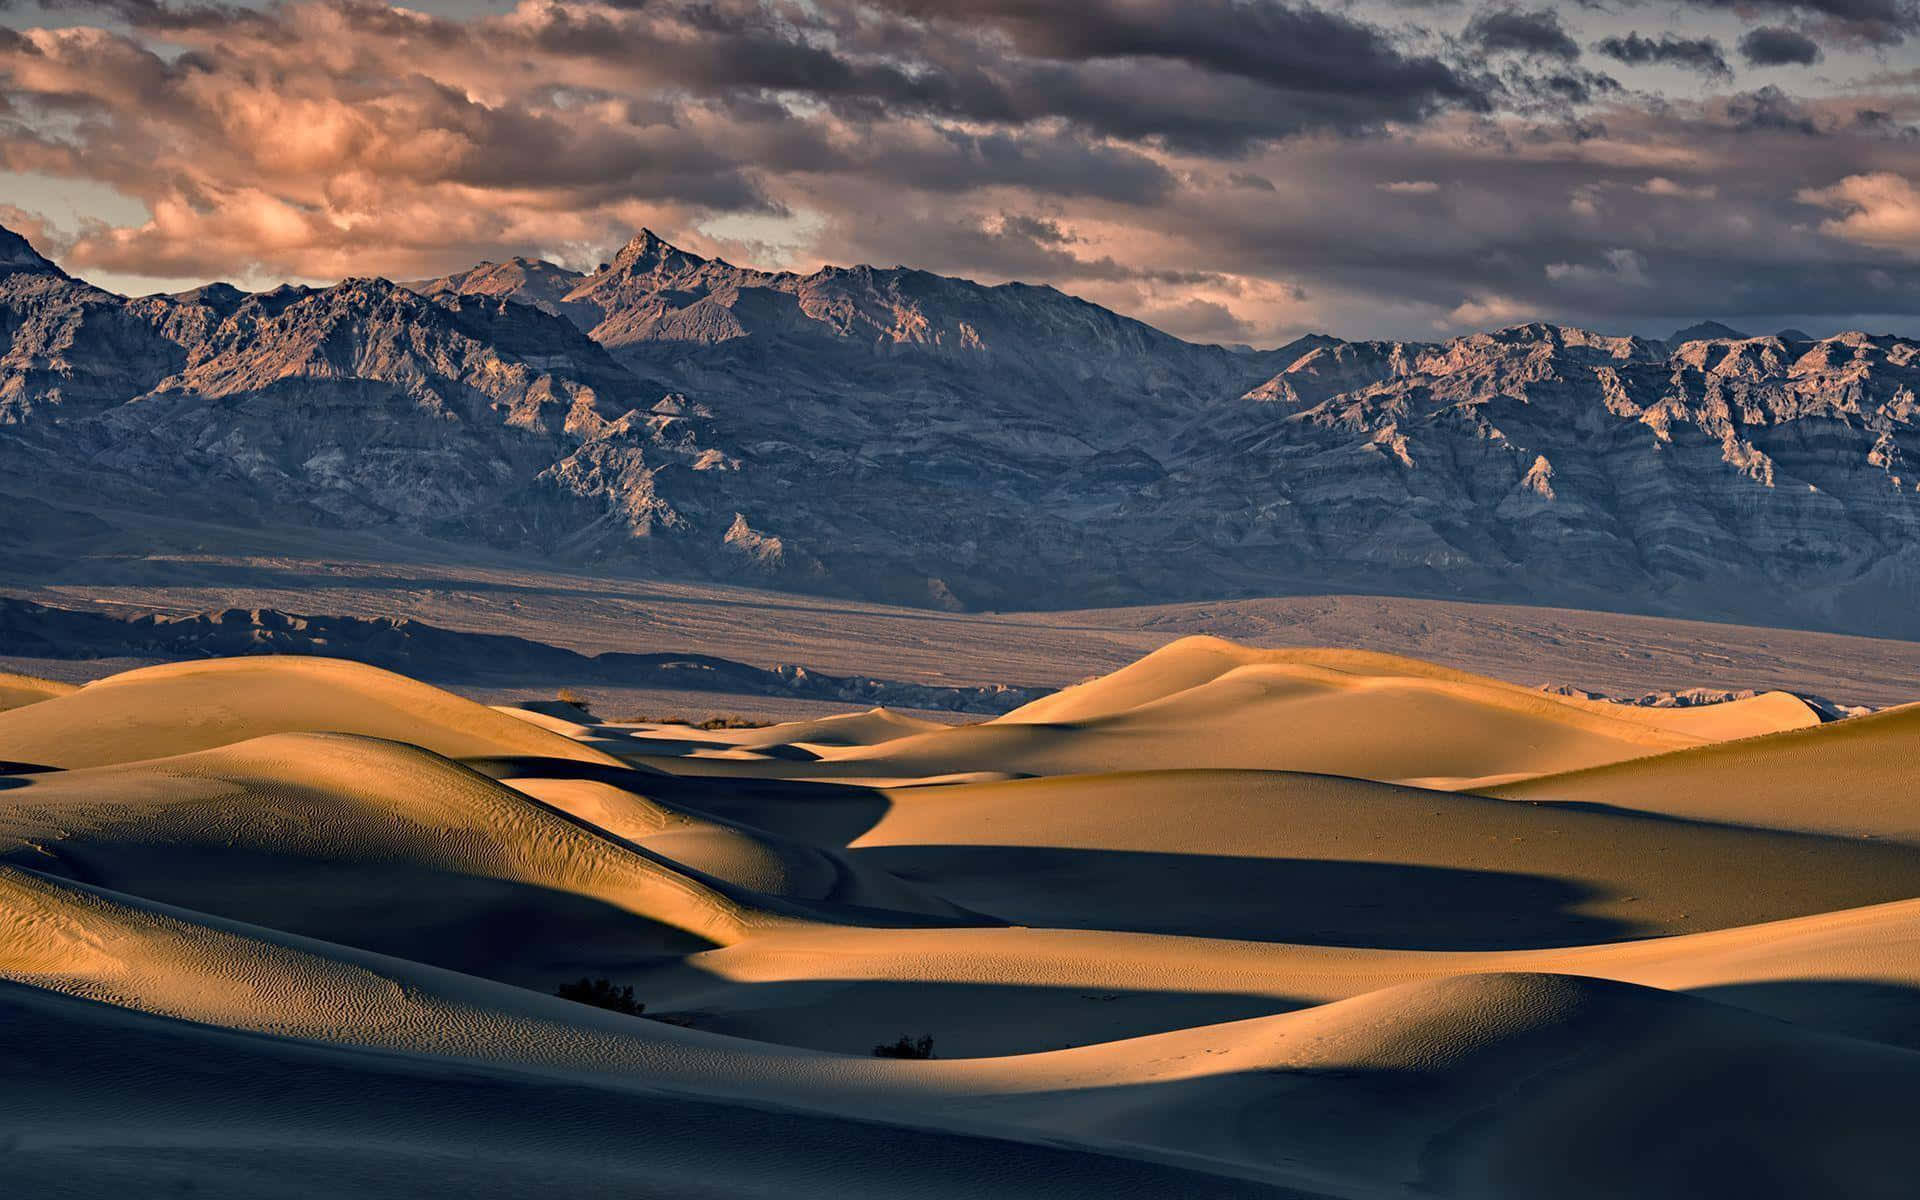 Explore the otherworldly landscape of the planet Arrakis